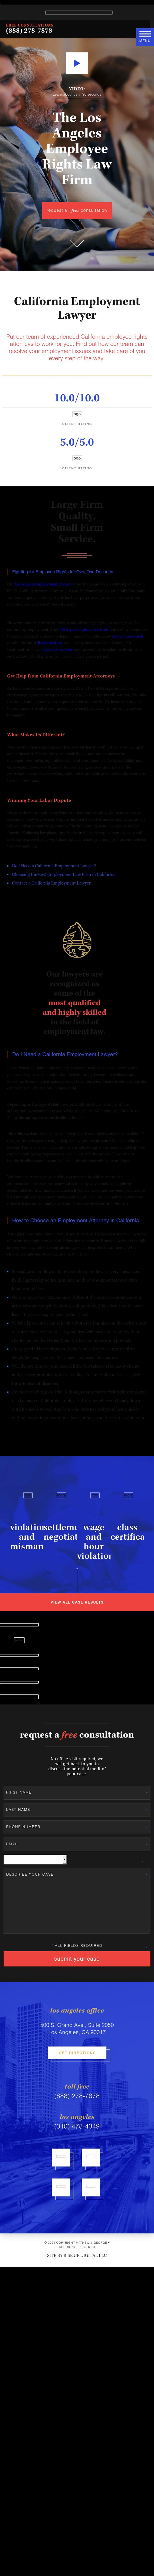 Mathew & George - Los Angeles CA Lawyers